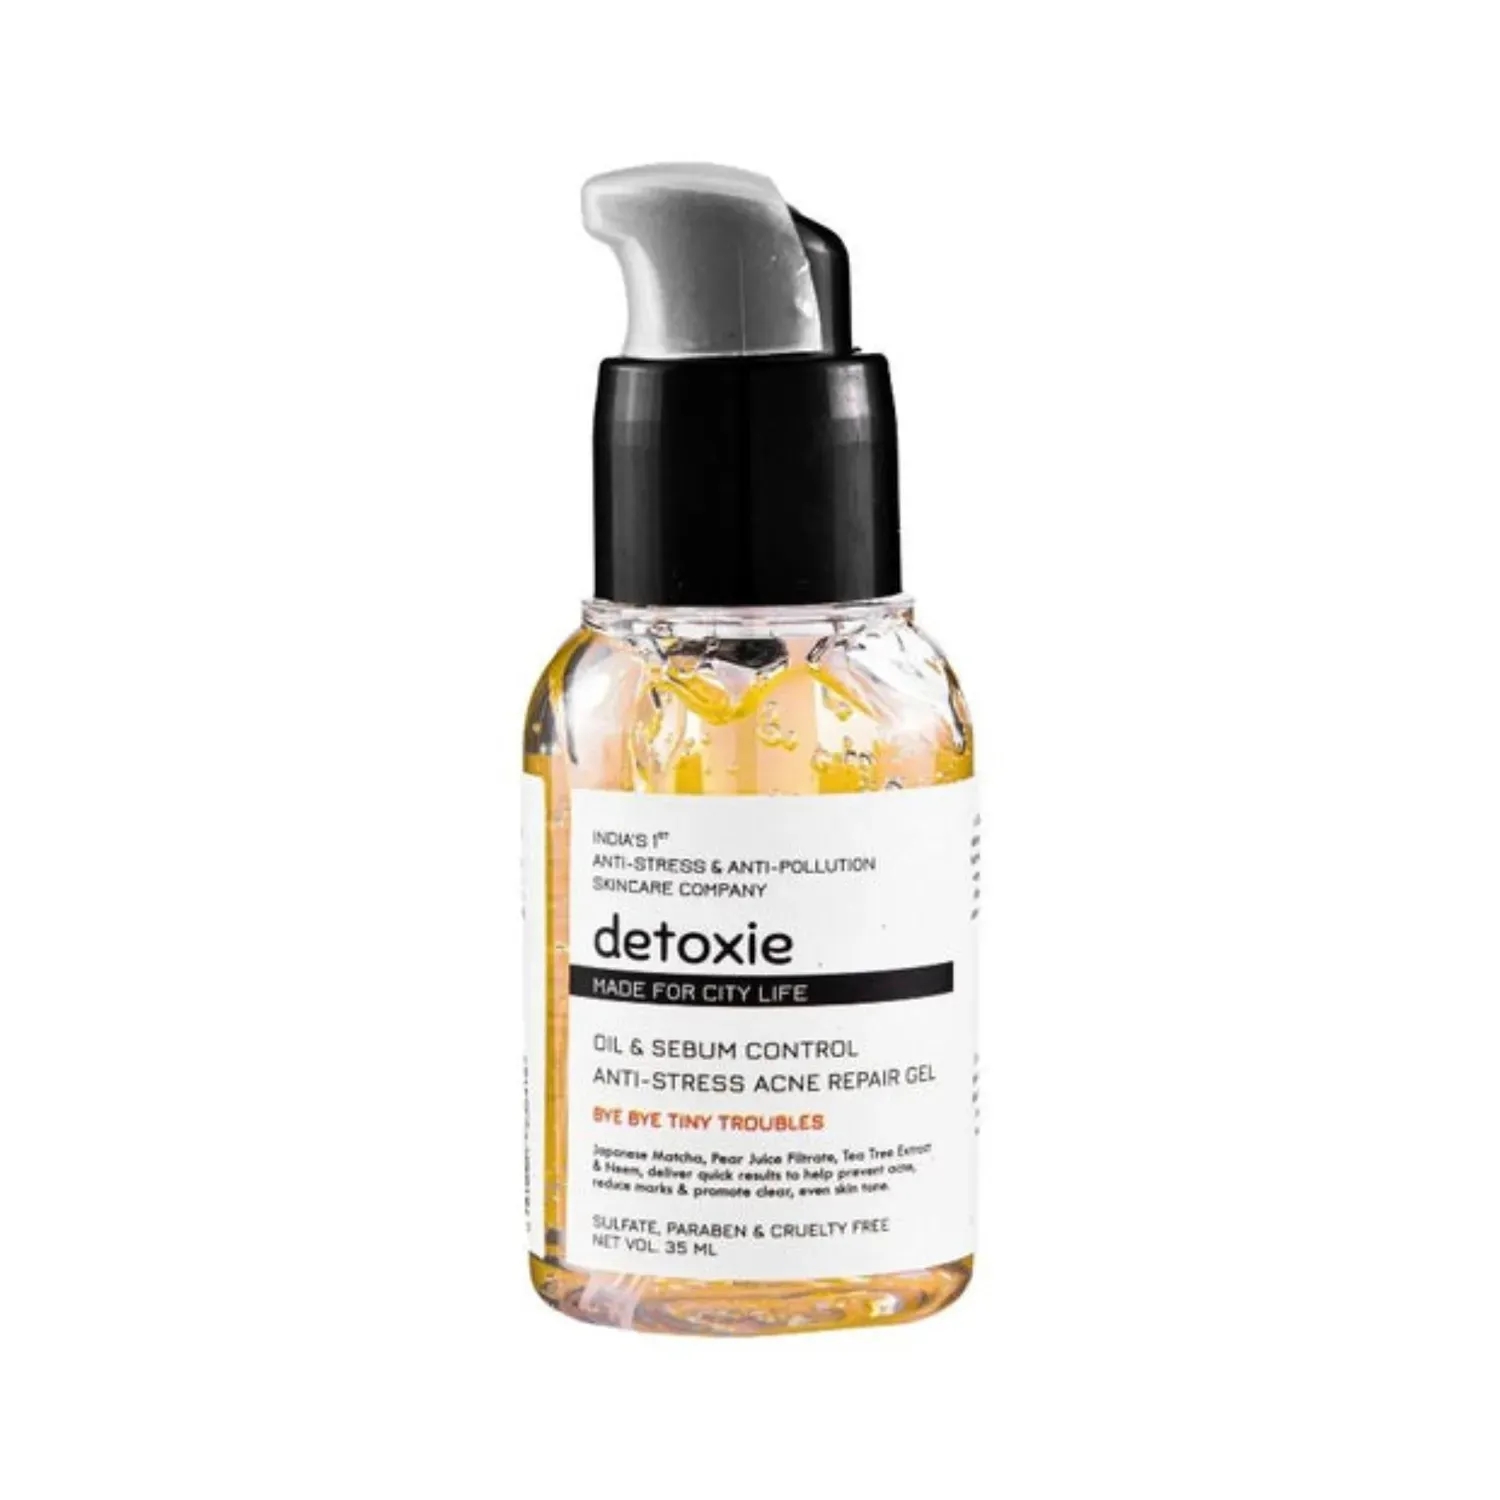 Detoxie | Detoxie Oil & Sebum Control Anti-Stress Acne Repair Gel (35ml)